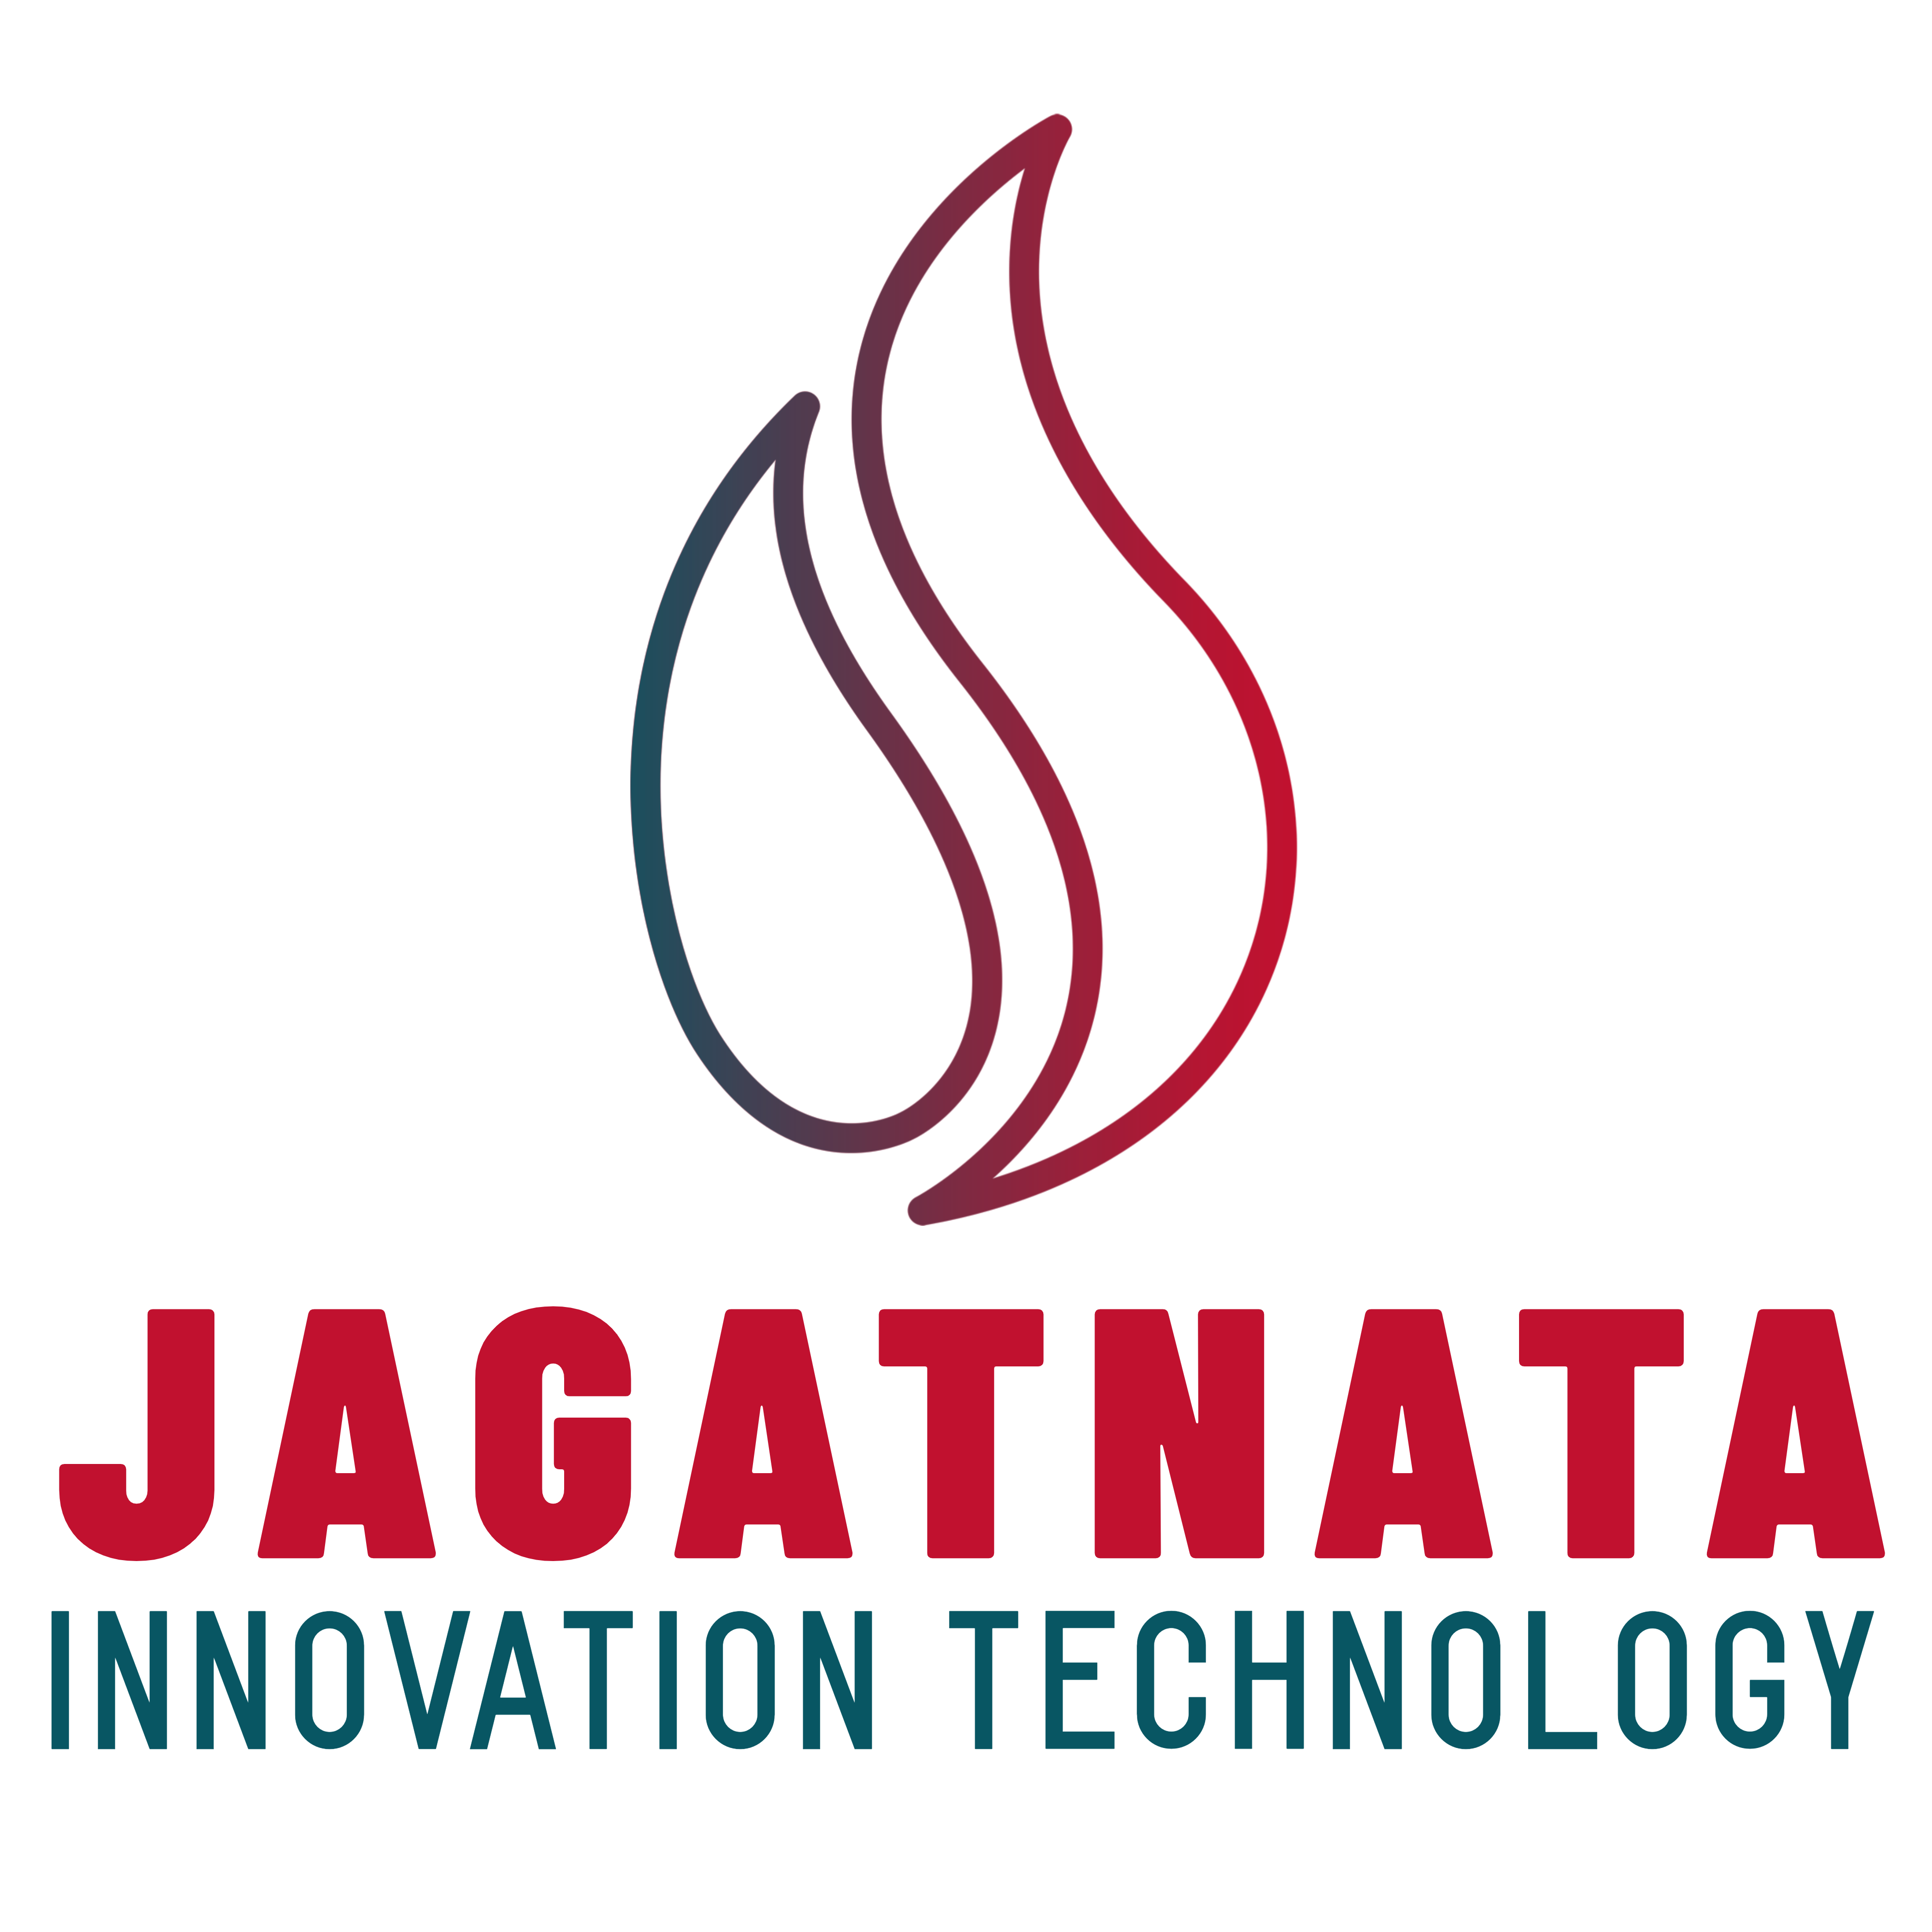 PT. JAGATNATA INNOVATION TECHNOLOGY